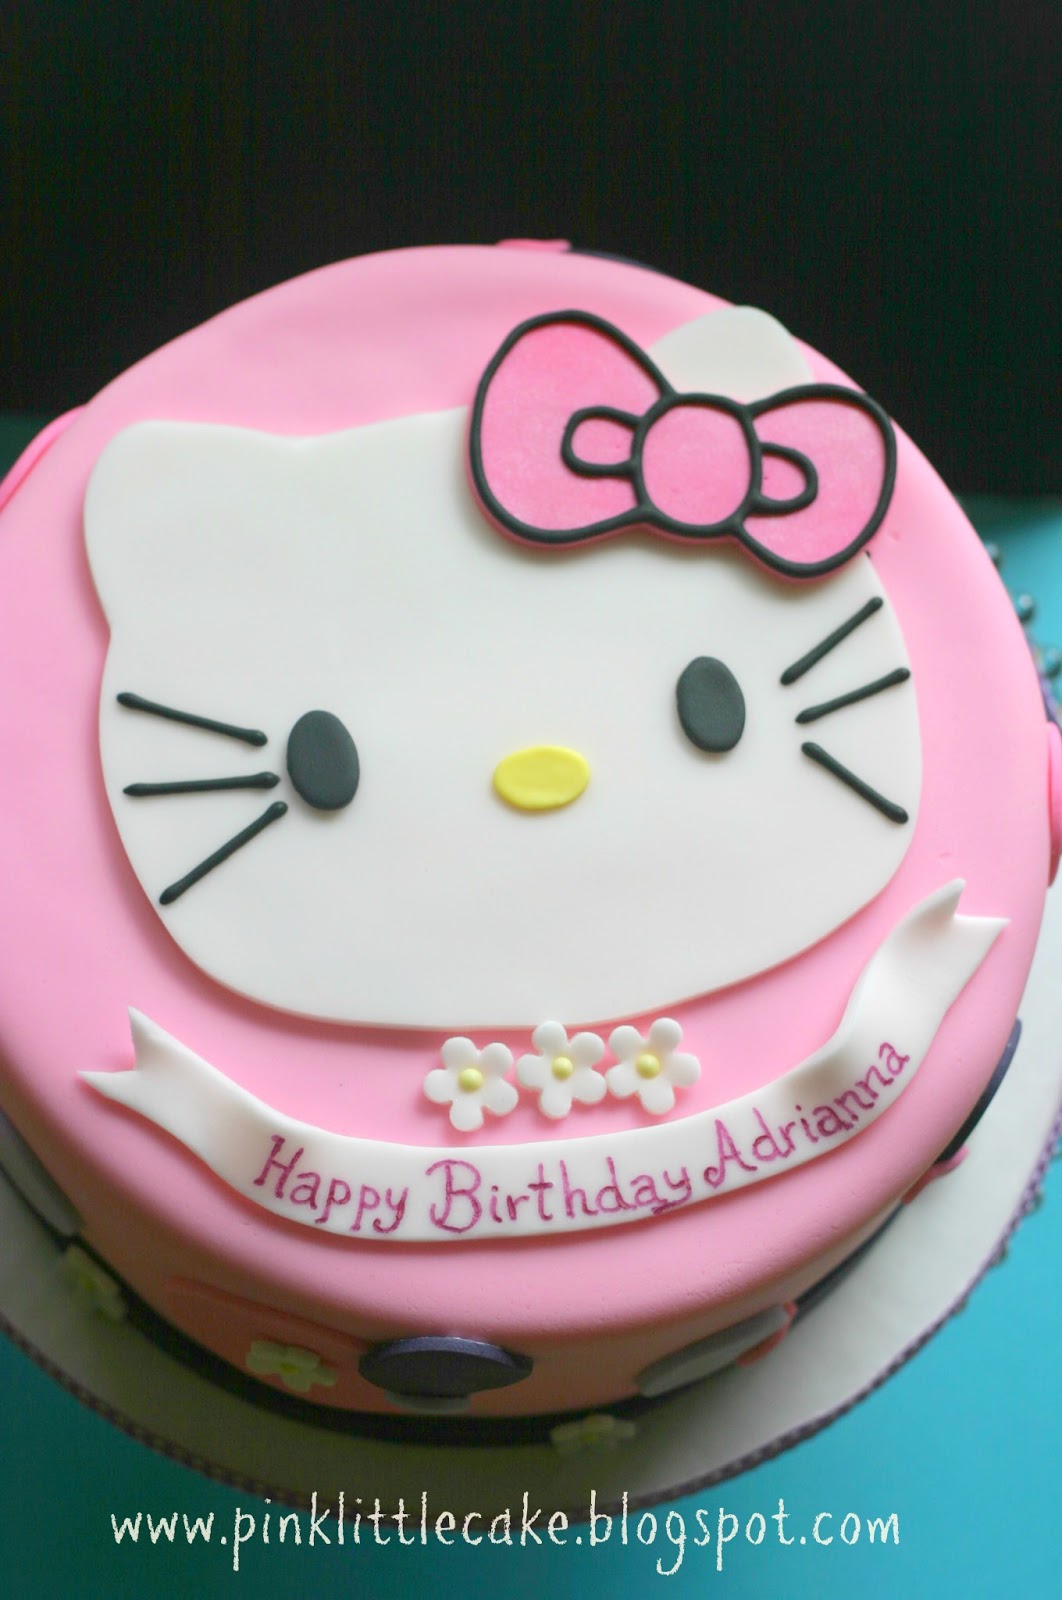 10 Hello Kitty Birthday Cakes For Girls 12th Photo Small Hello